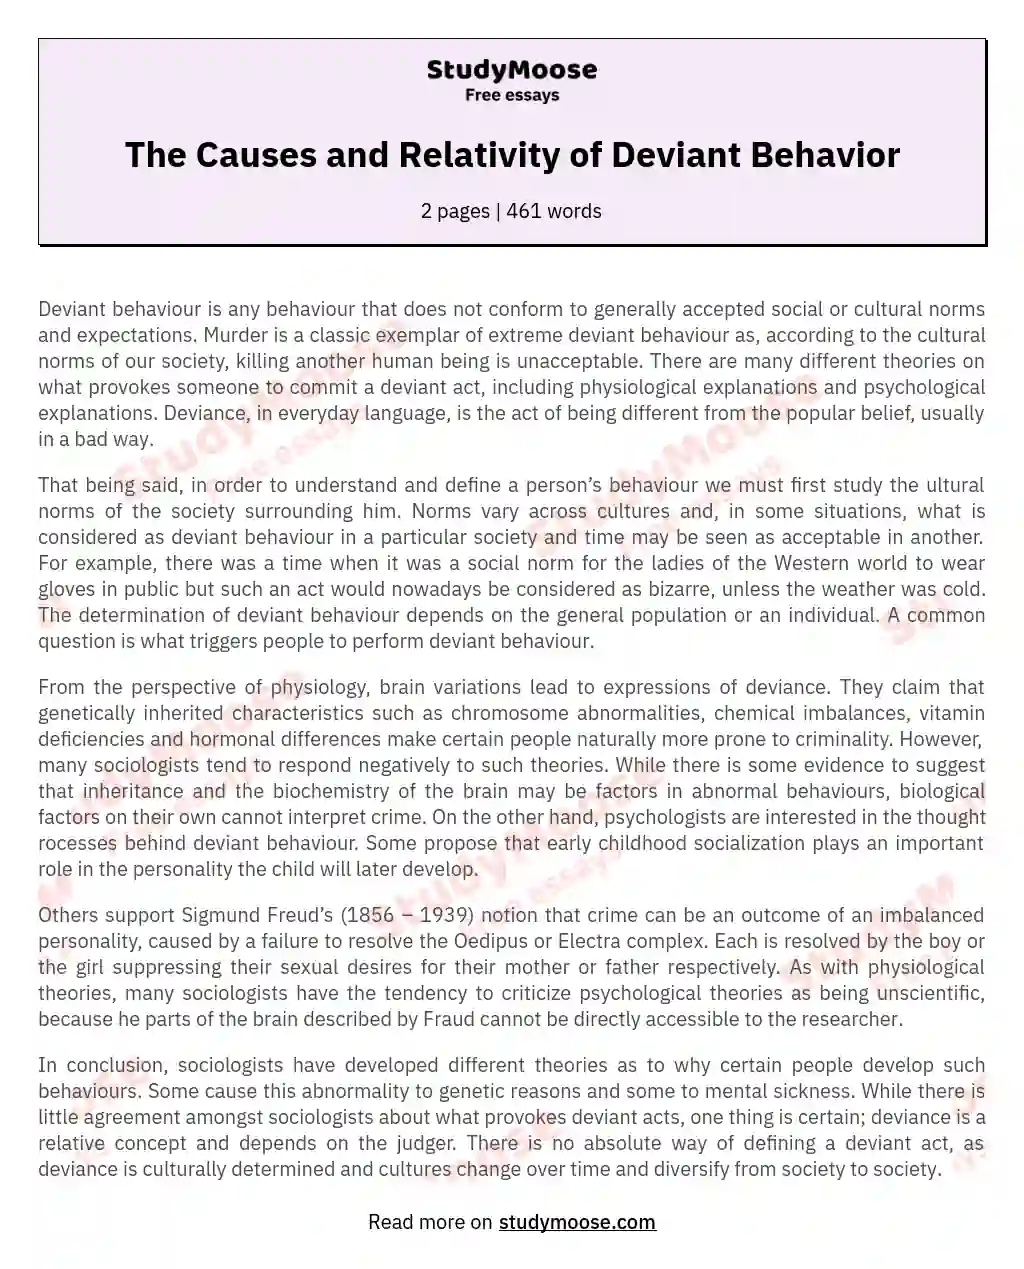 The Causes and Relativity of Deviant Behavior essay